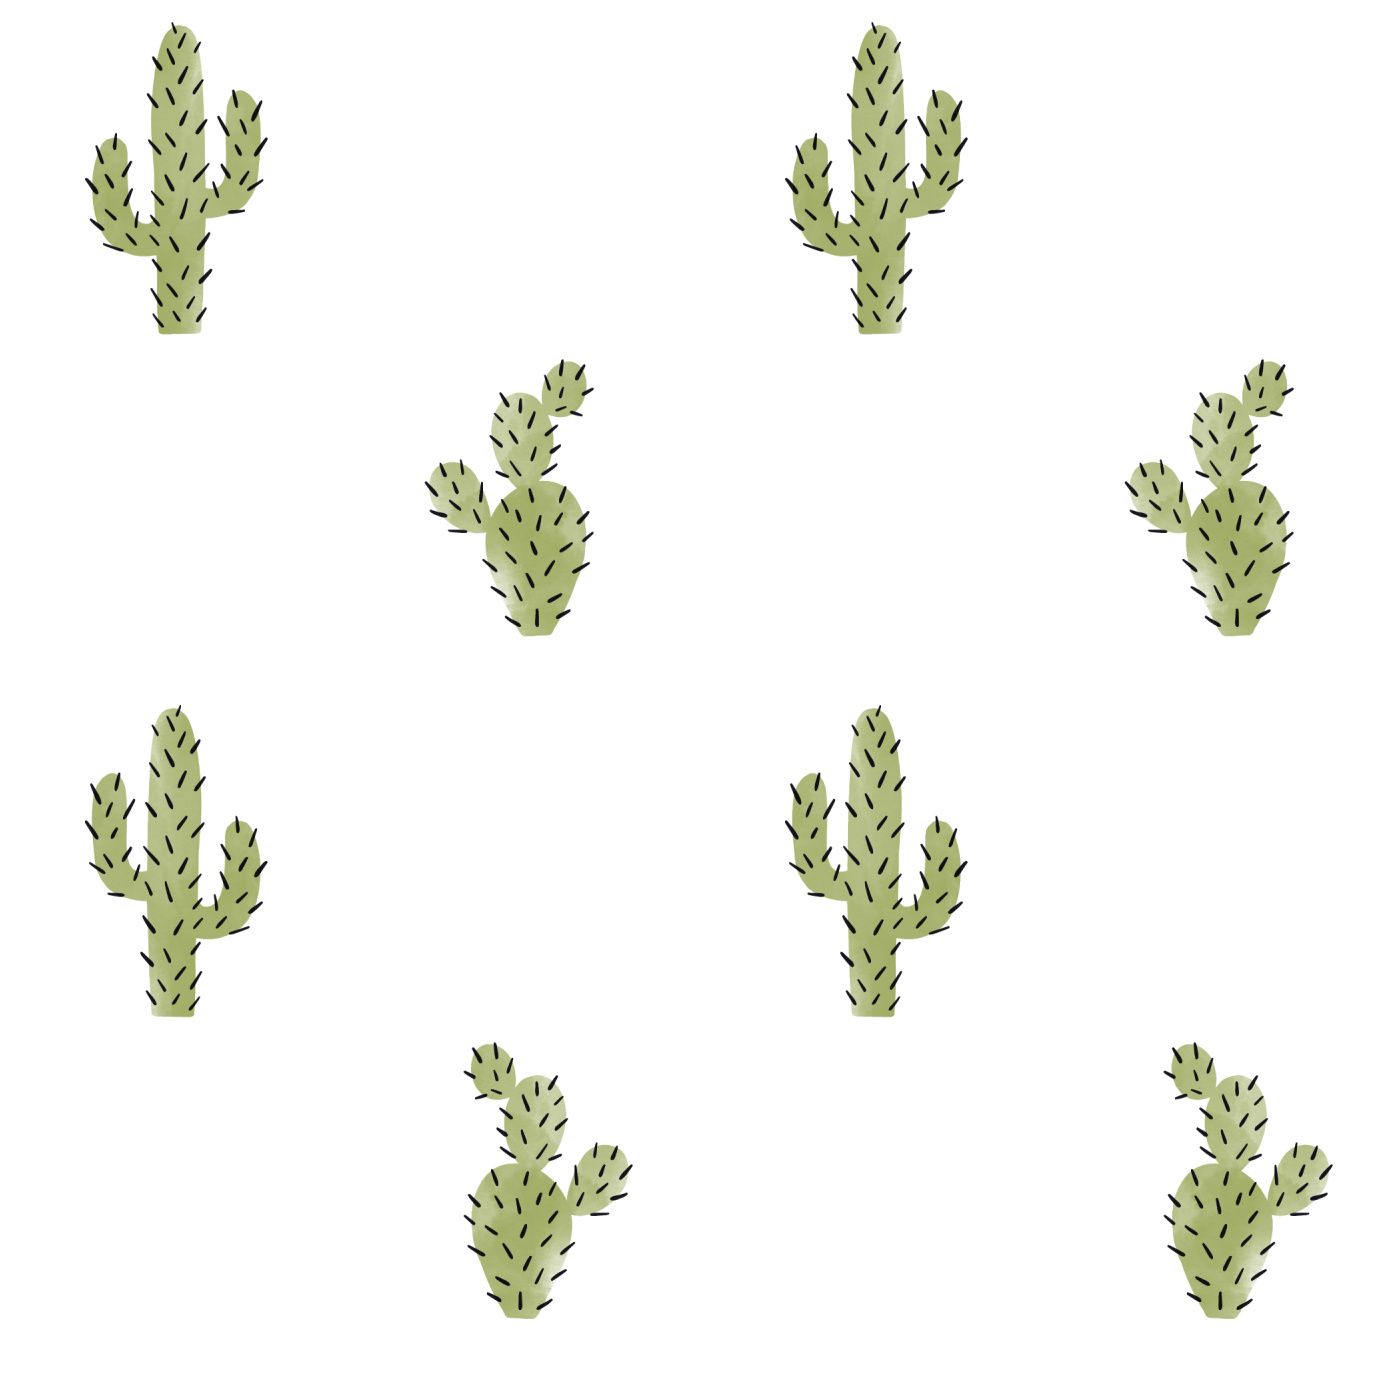 Cute Cactus Wallpaper by Love vs. Design